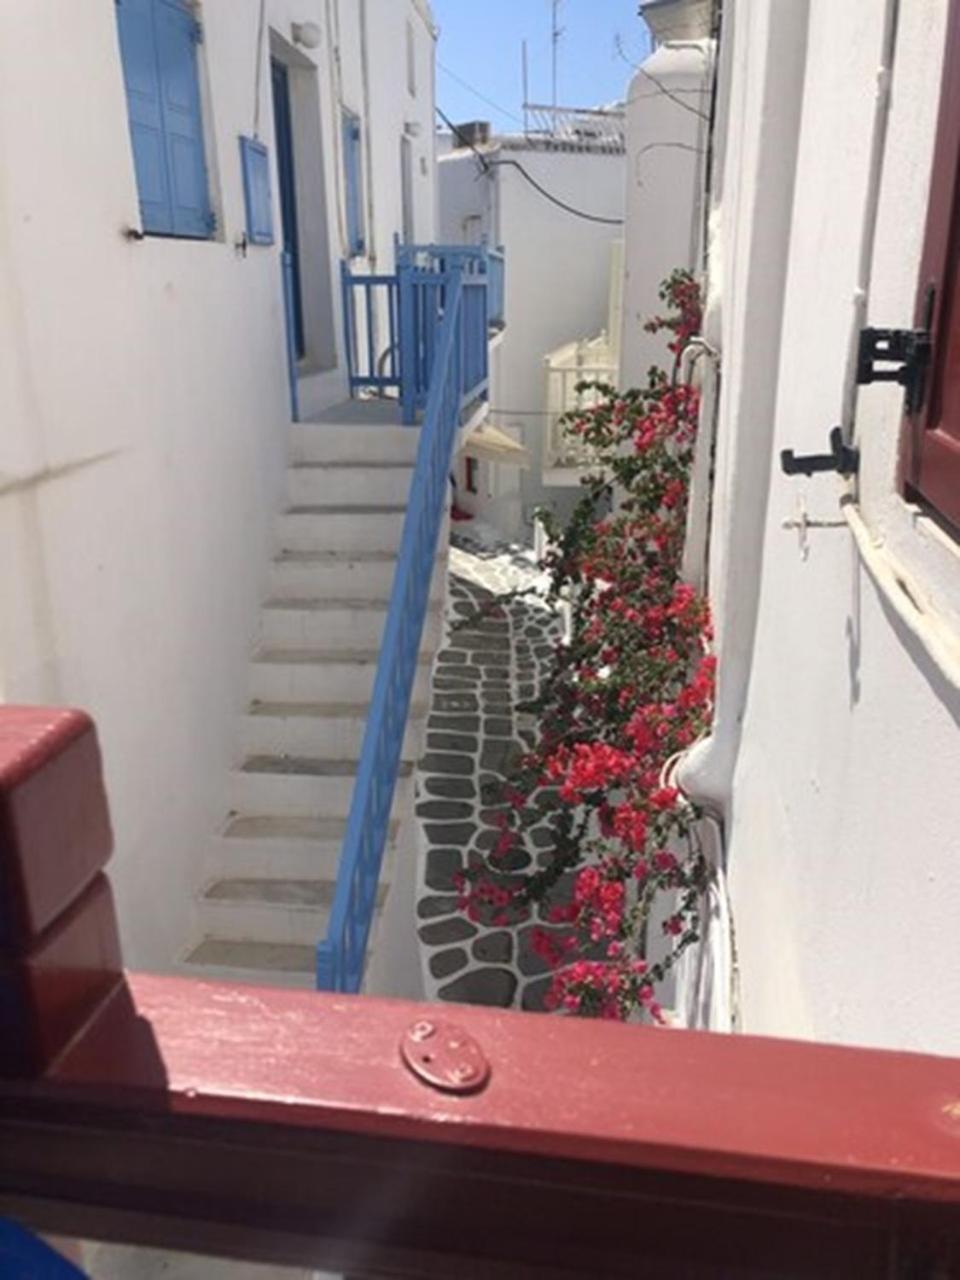 La Maison Kalogera Mykonos Town Exterior photo